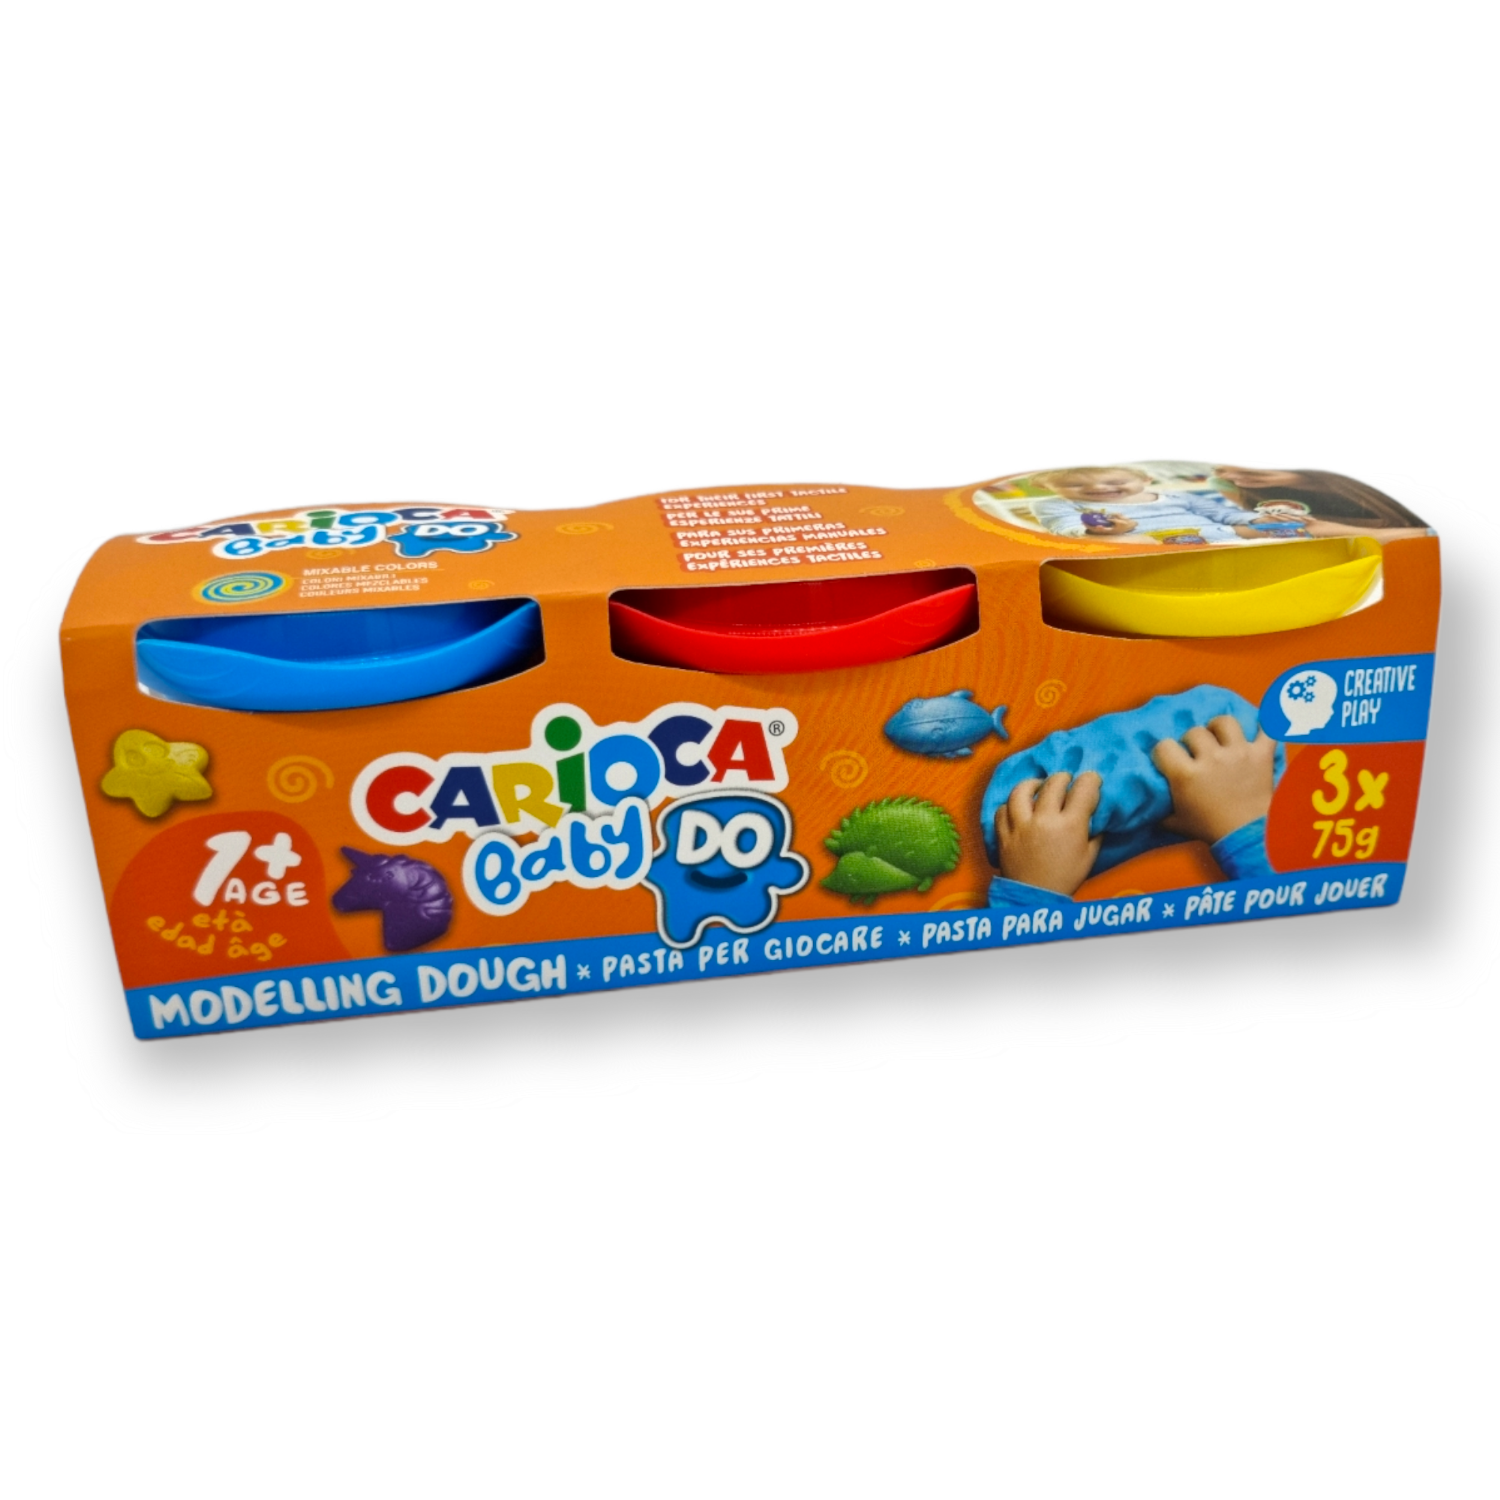 Carioca Baby Modelling Dough +1 3x75g